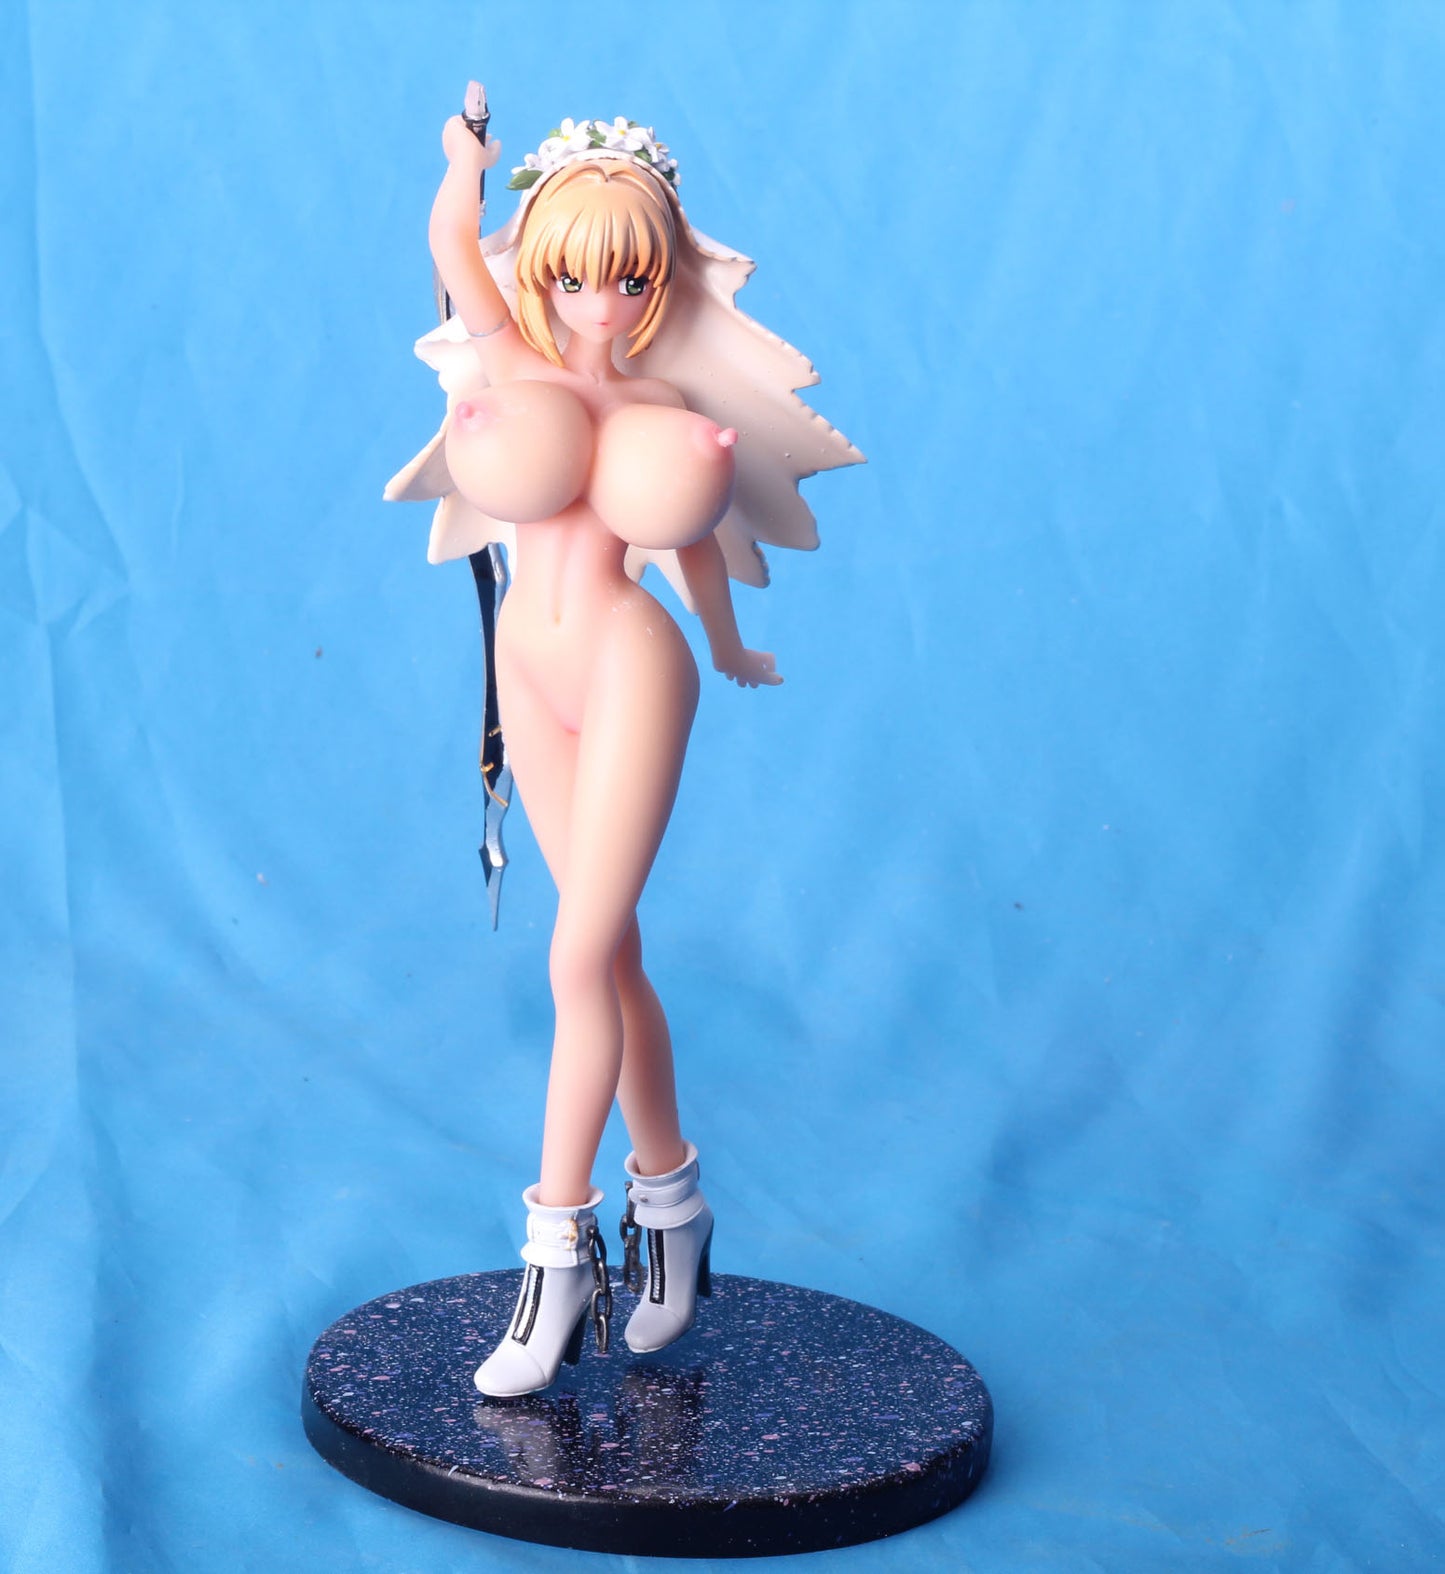 Japanese anime action figures sexy Saber 16/ naked anime girl figure resin model figures